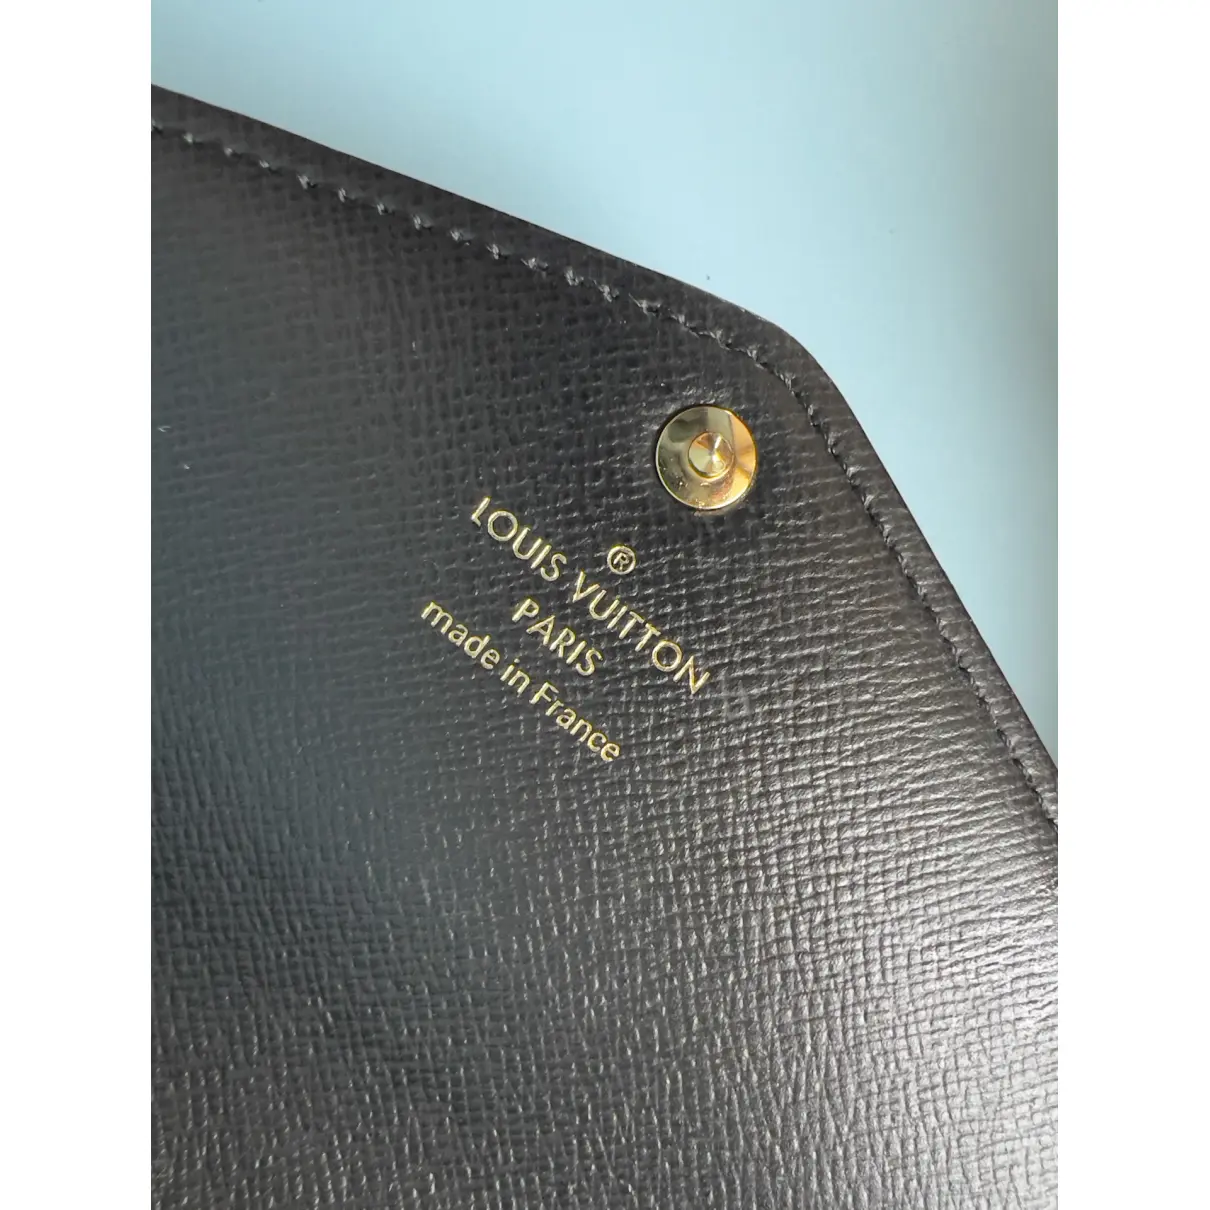 Buy Louis Vuitton Sarah leather wallet online